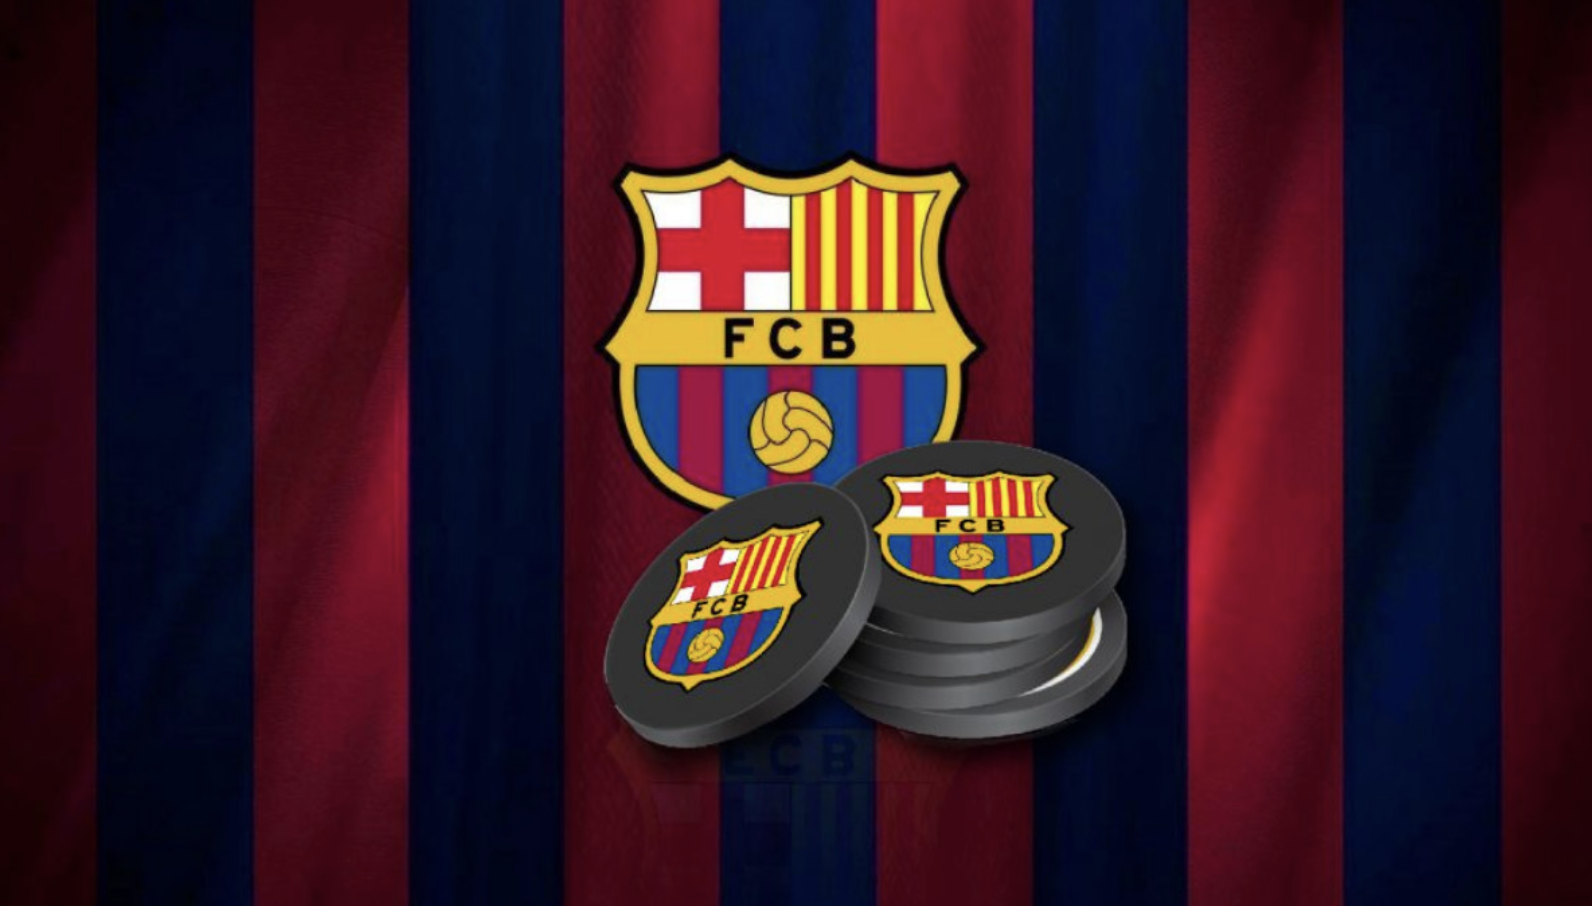 How to Get FC Barcelona Fan Token?